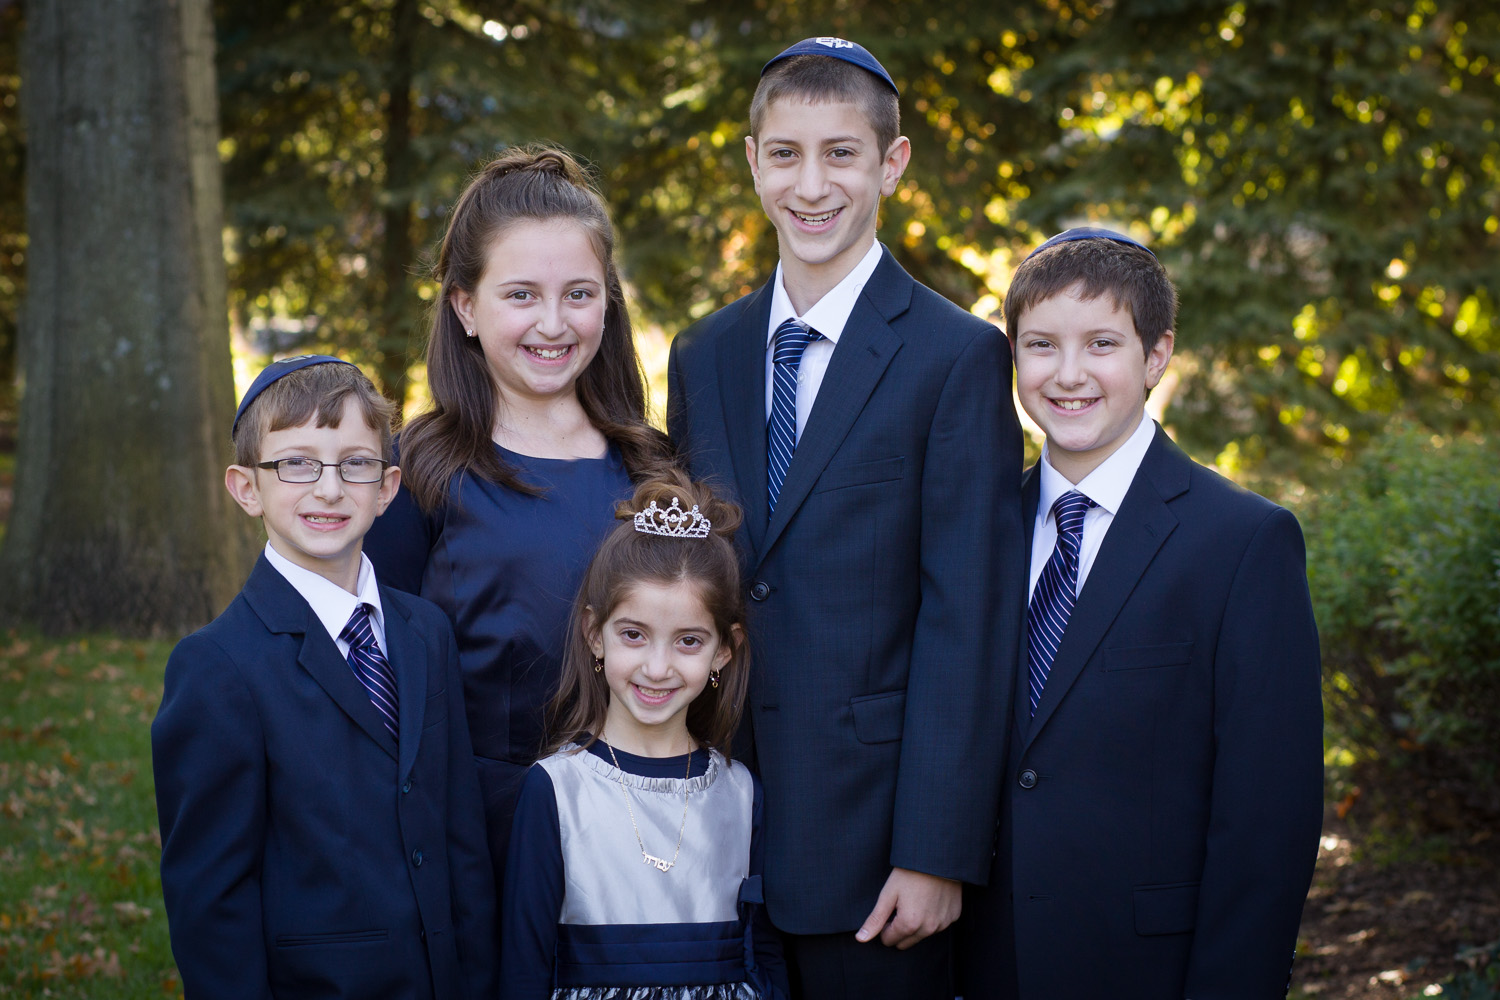 barmitzvah and siblings portrait